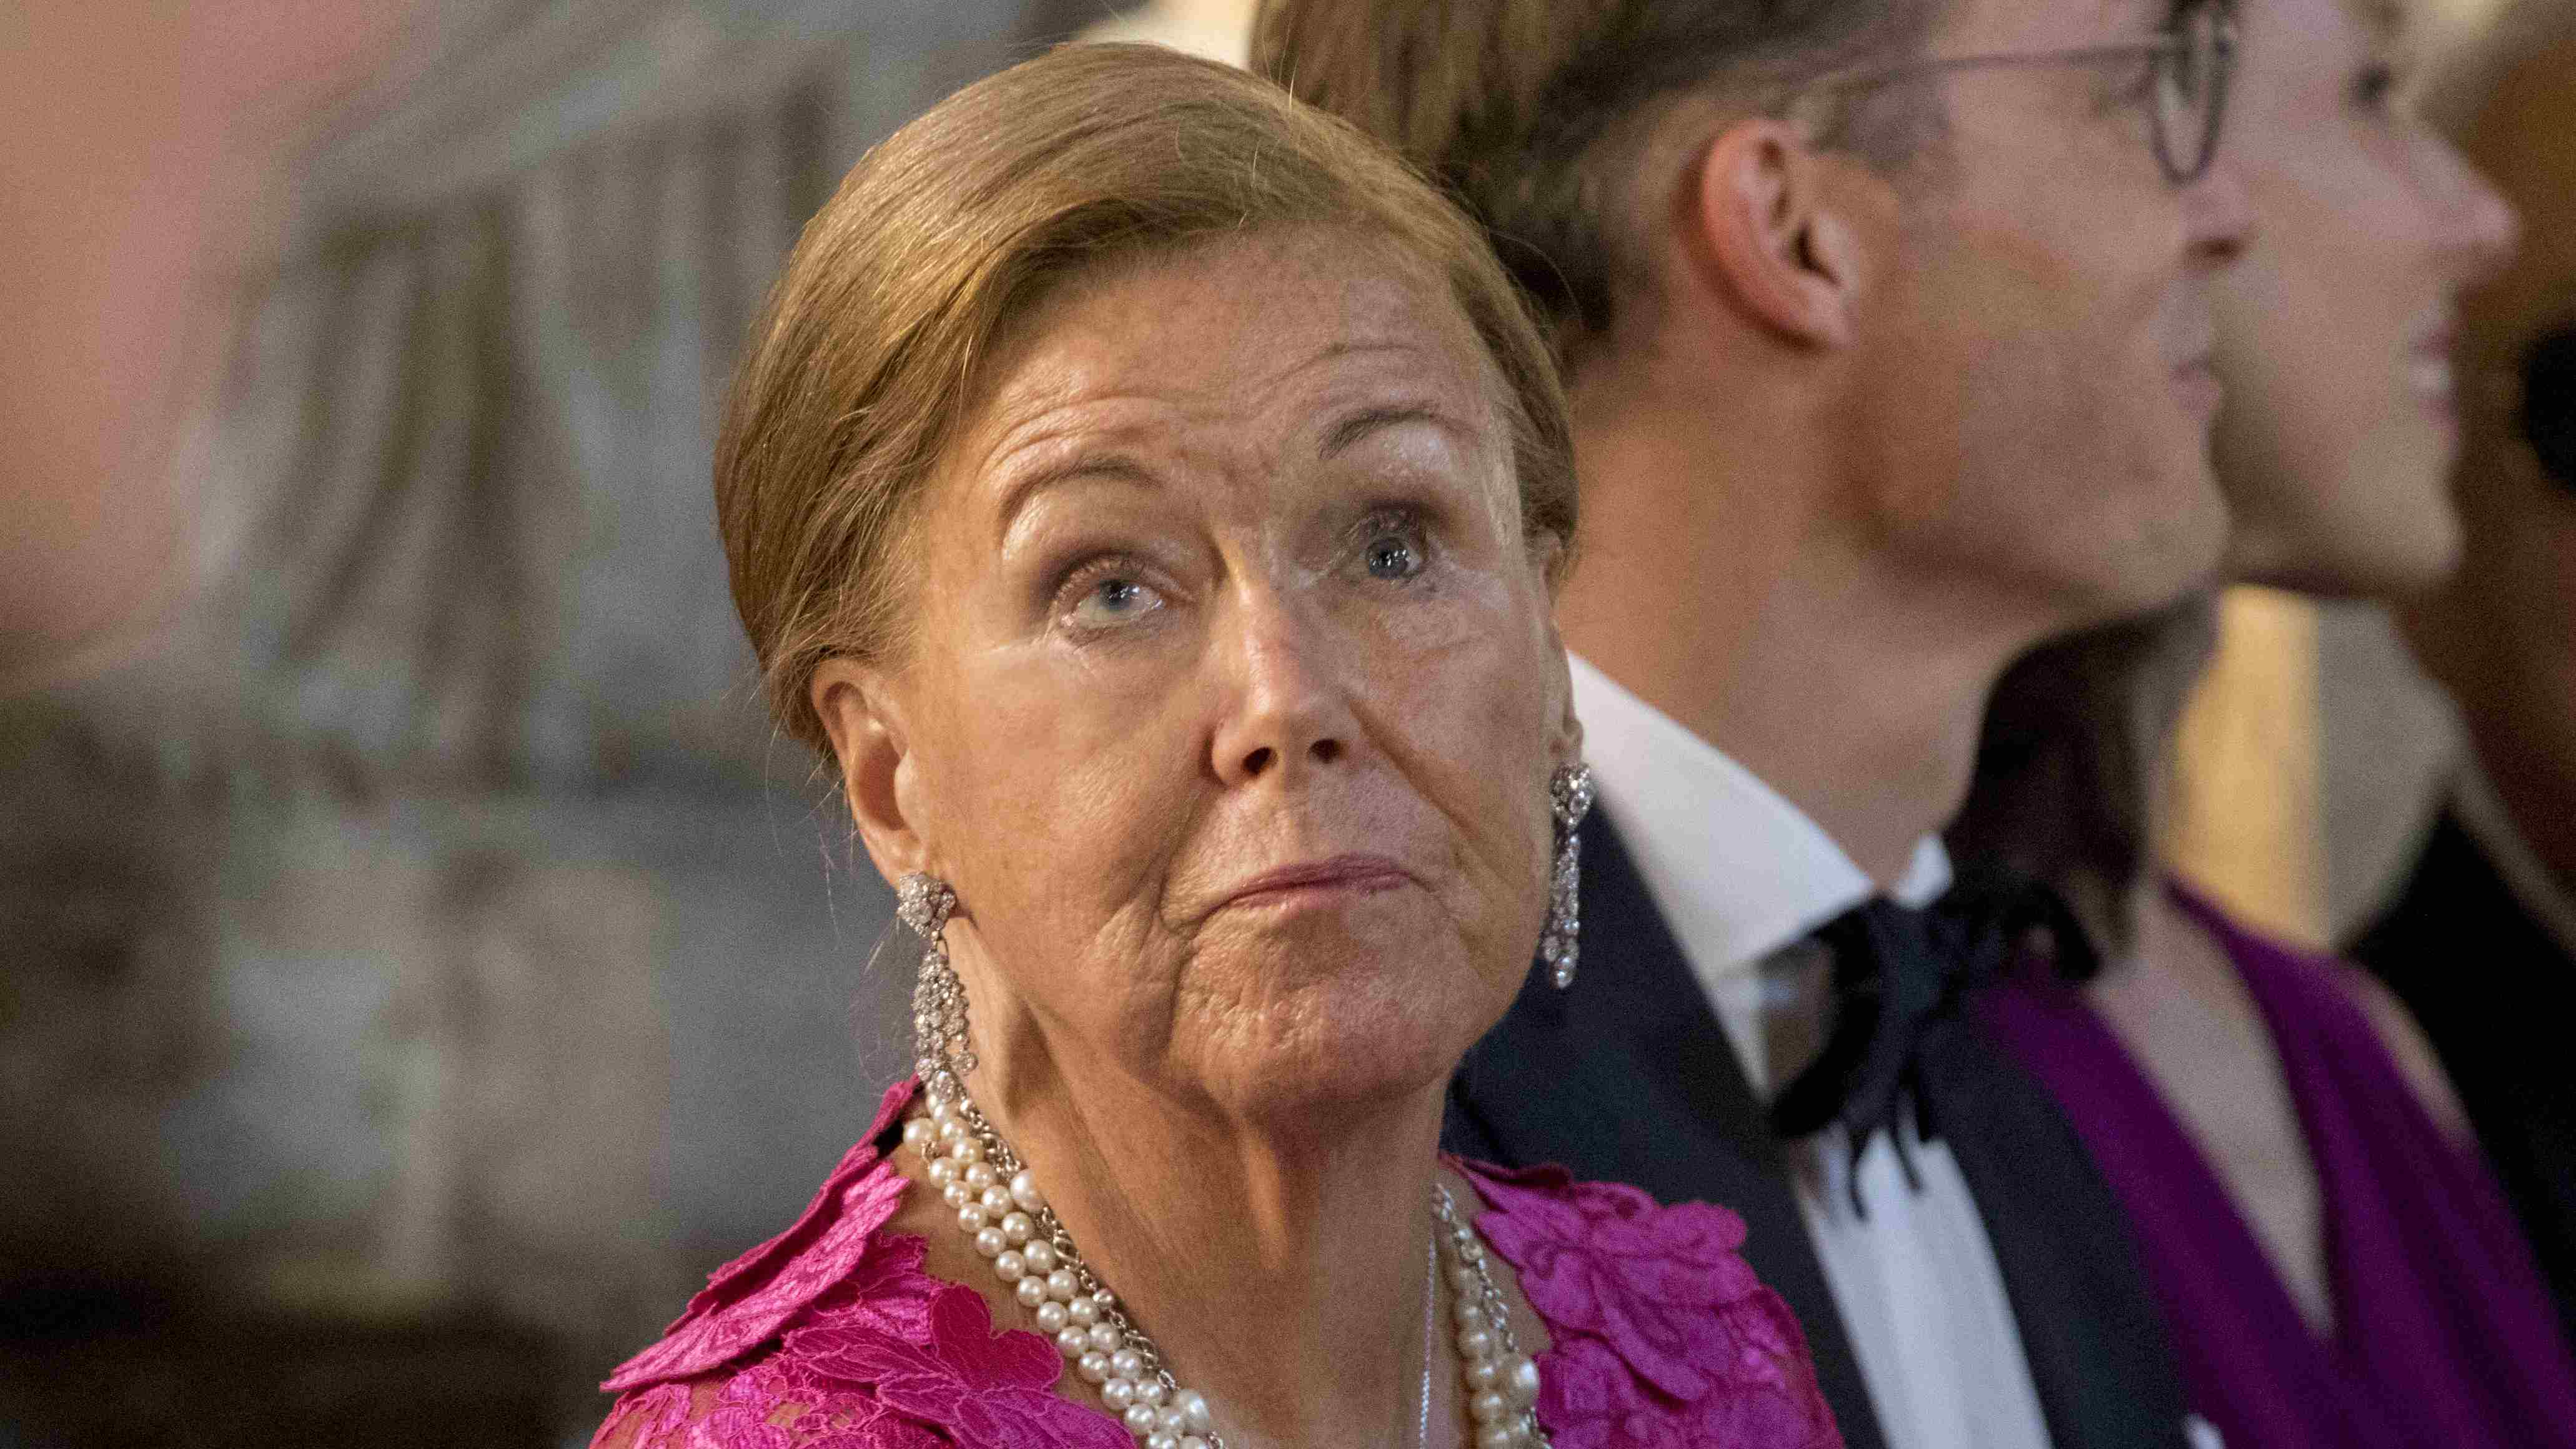 Princess Christina of Netherlands passes away at 72